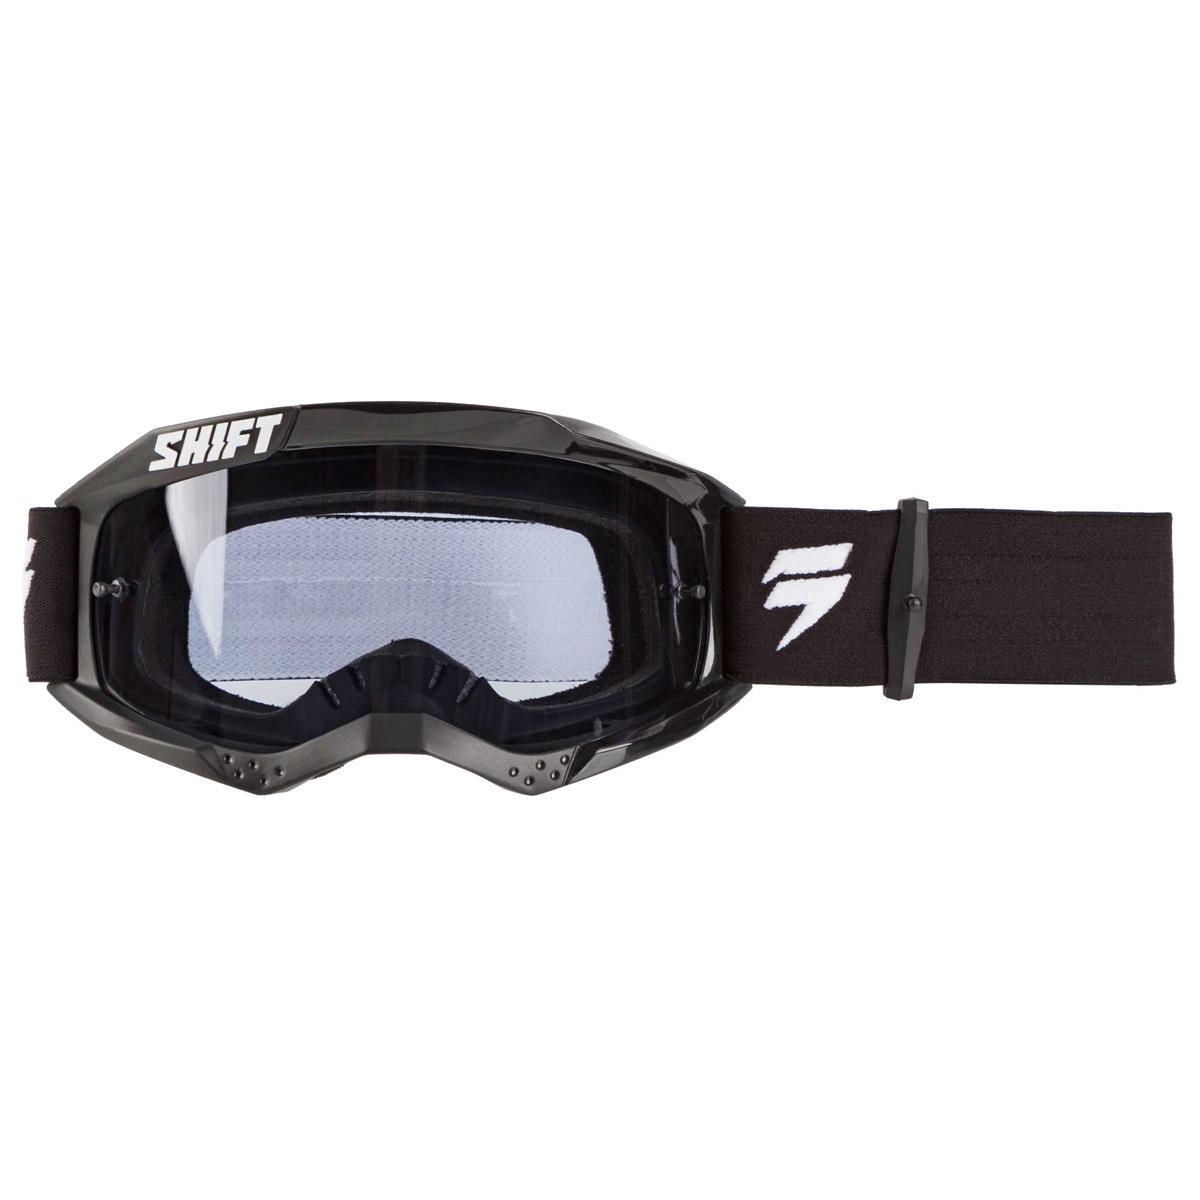 Shift Goggle Whit3 Label Black/White - Anti-Fog